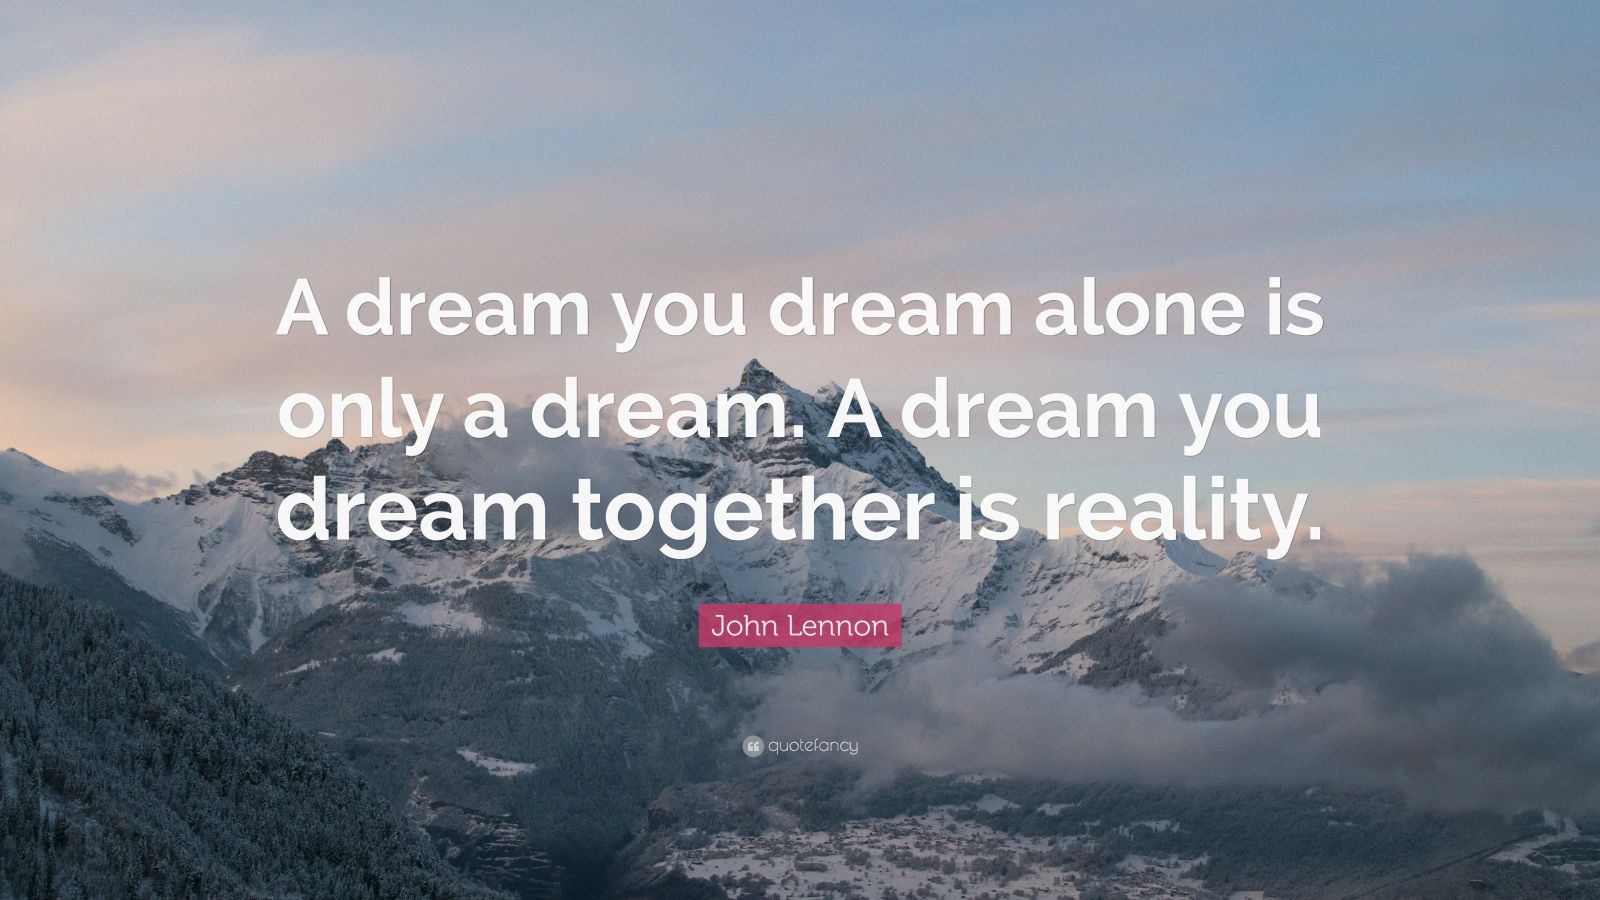 John Lennon Quote: “A dream you dream alone is only a dream. A dream ...